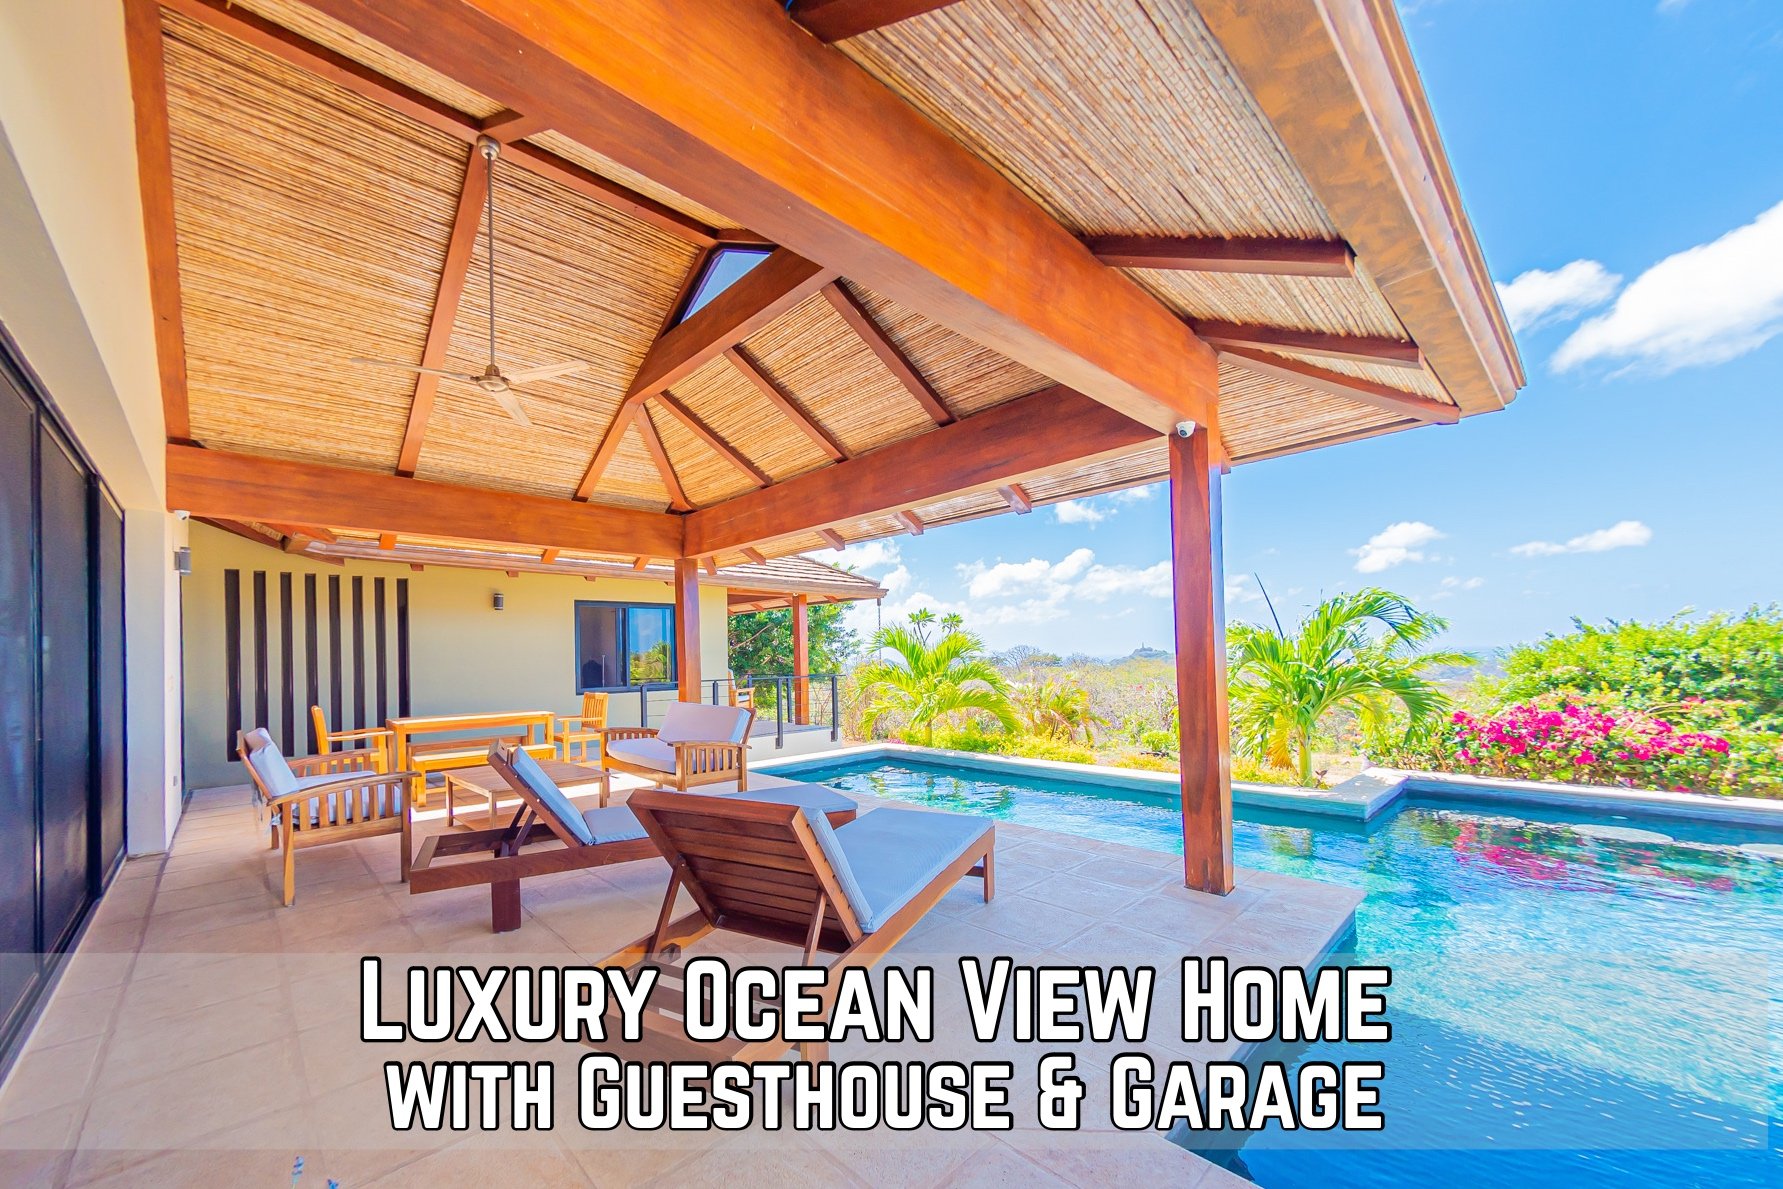 Home House Property For Sale San Juan Del Sur Nicaragua Ocean View Luxury Real Estate Profile 1-2.jpg